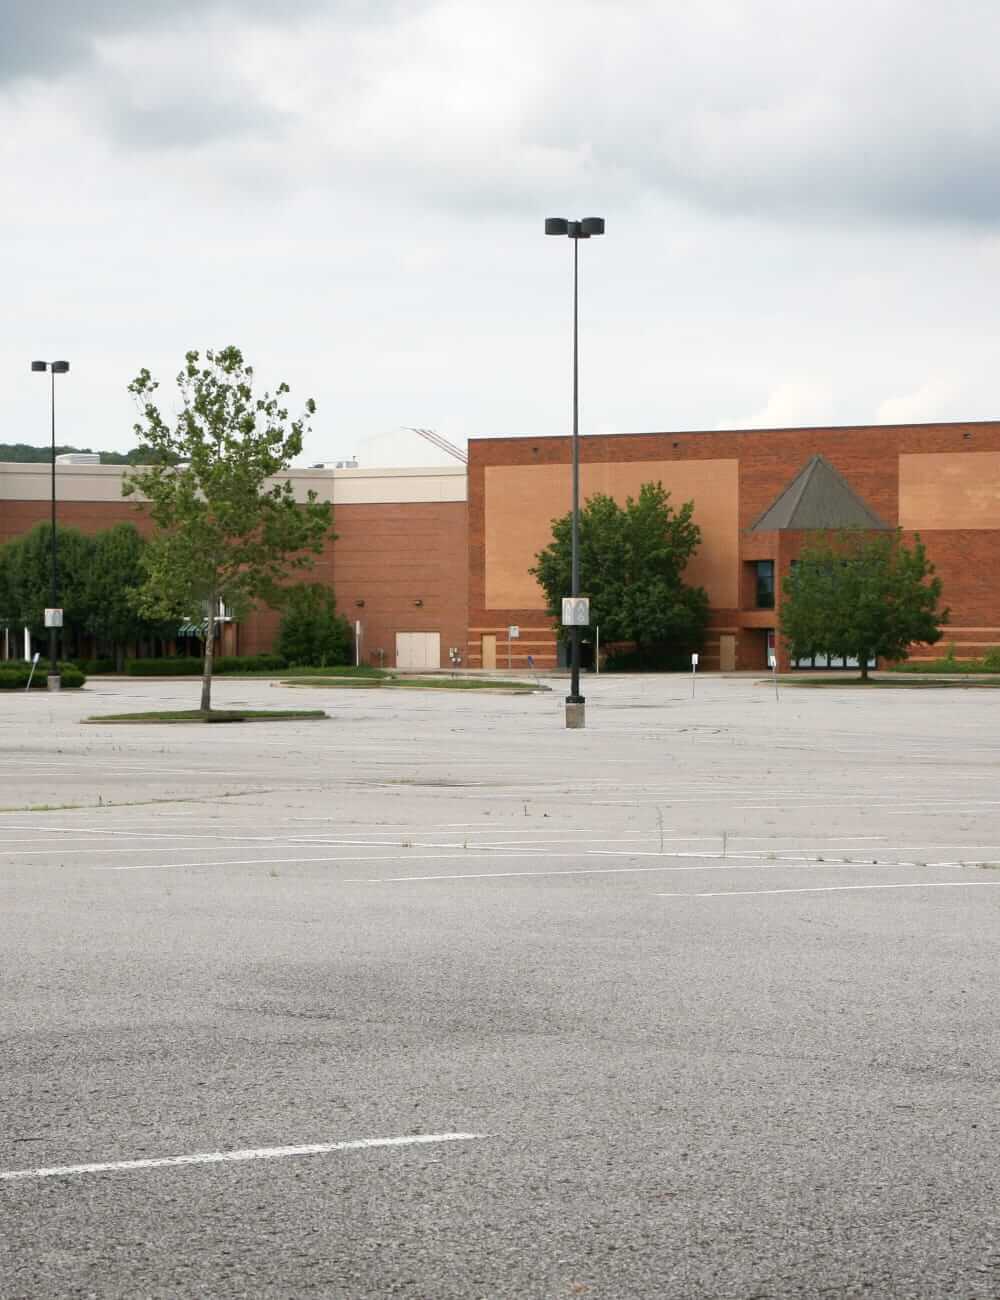 America's dying malls